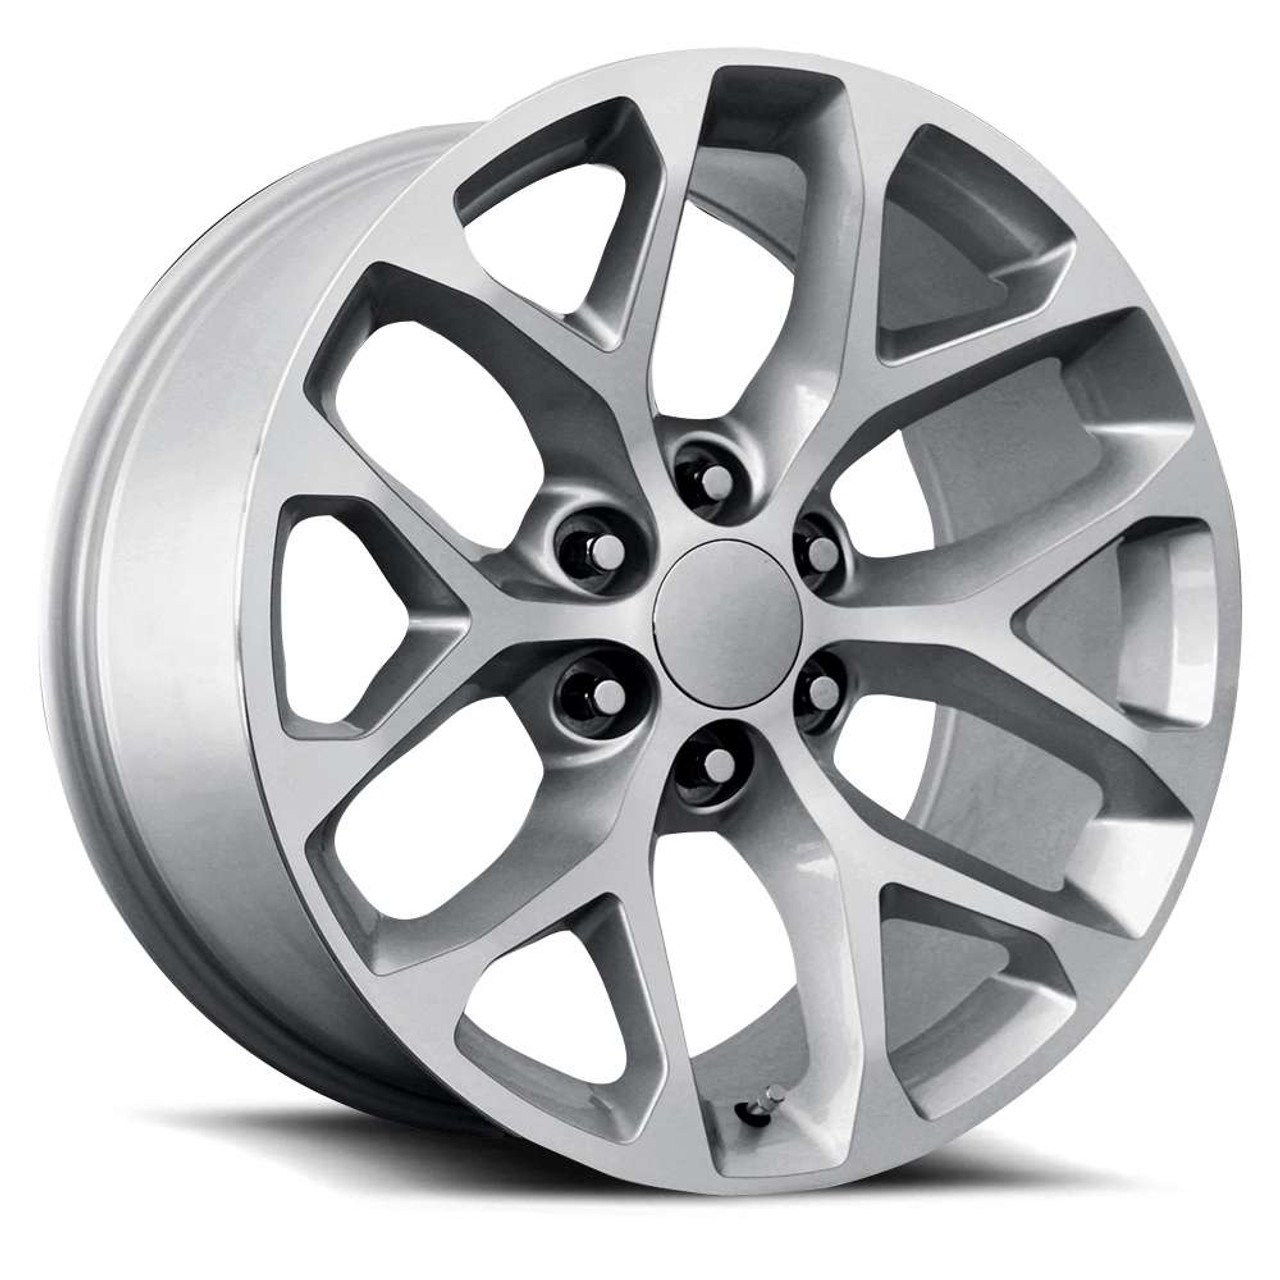 Topline 2015 GMC Sierra Wheels Rims 20x9 6x5.5 (6x139.7) Silver Machine ...